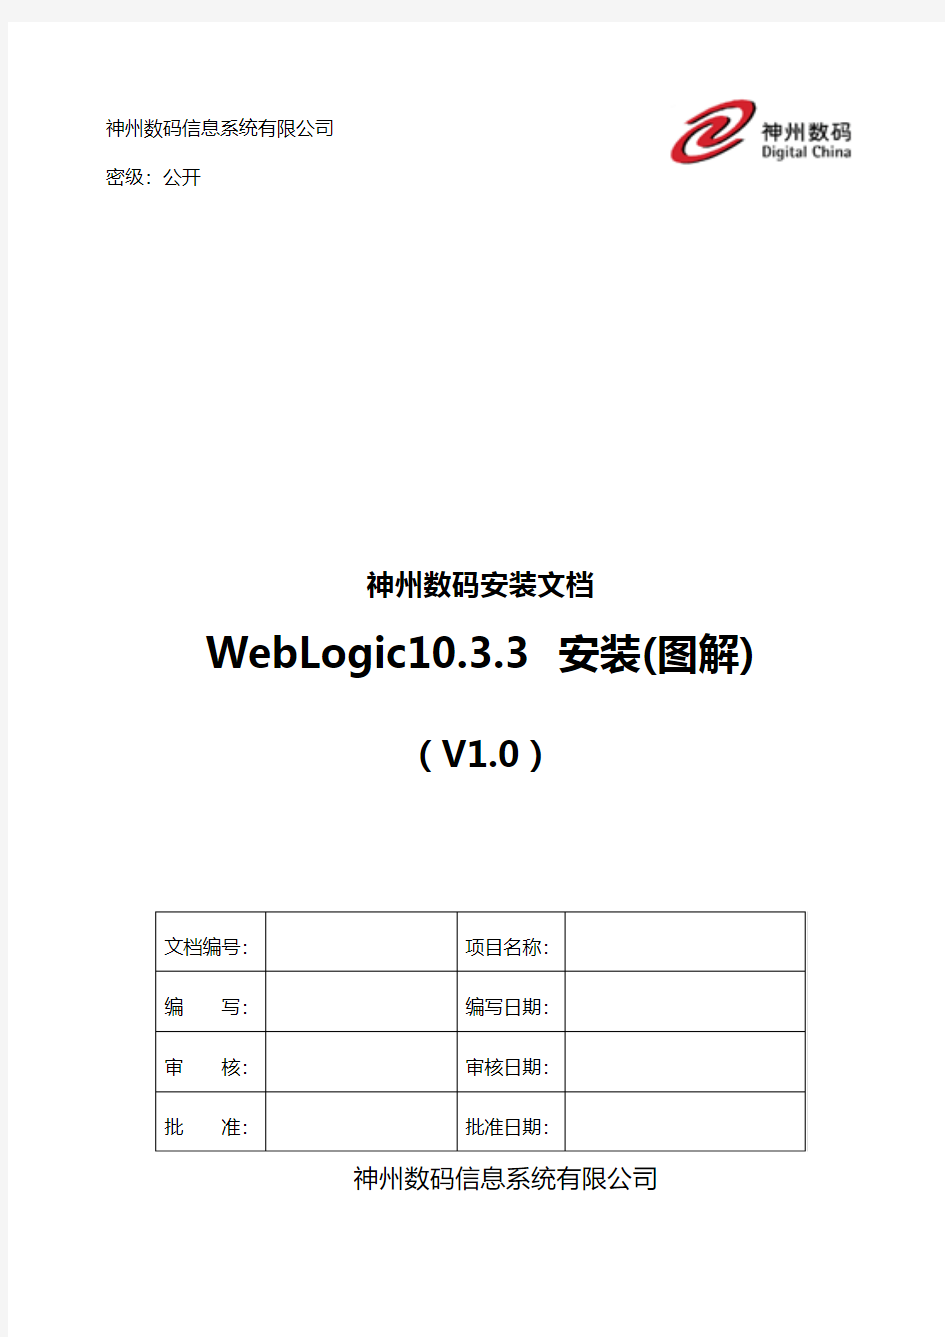 Weblogic10.3.3 安装手册V1.0